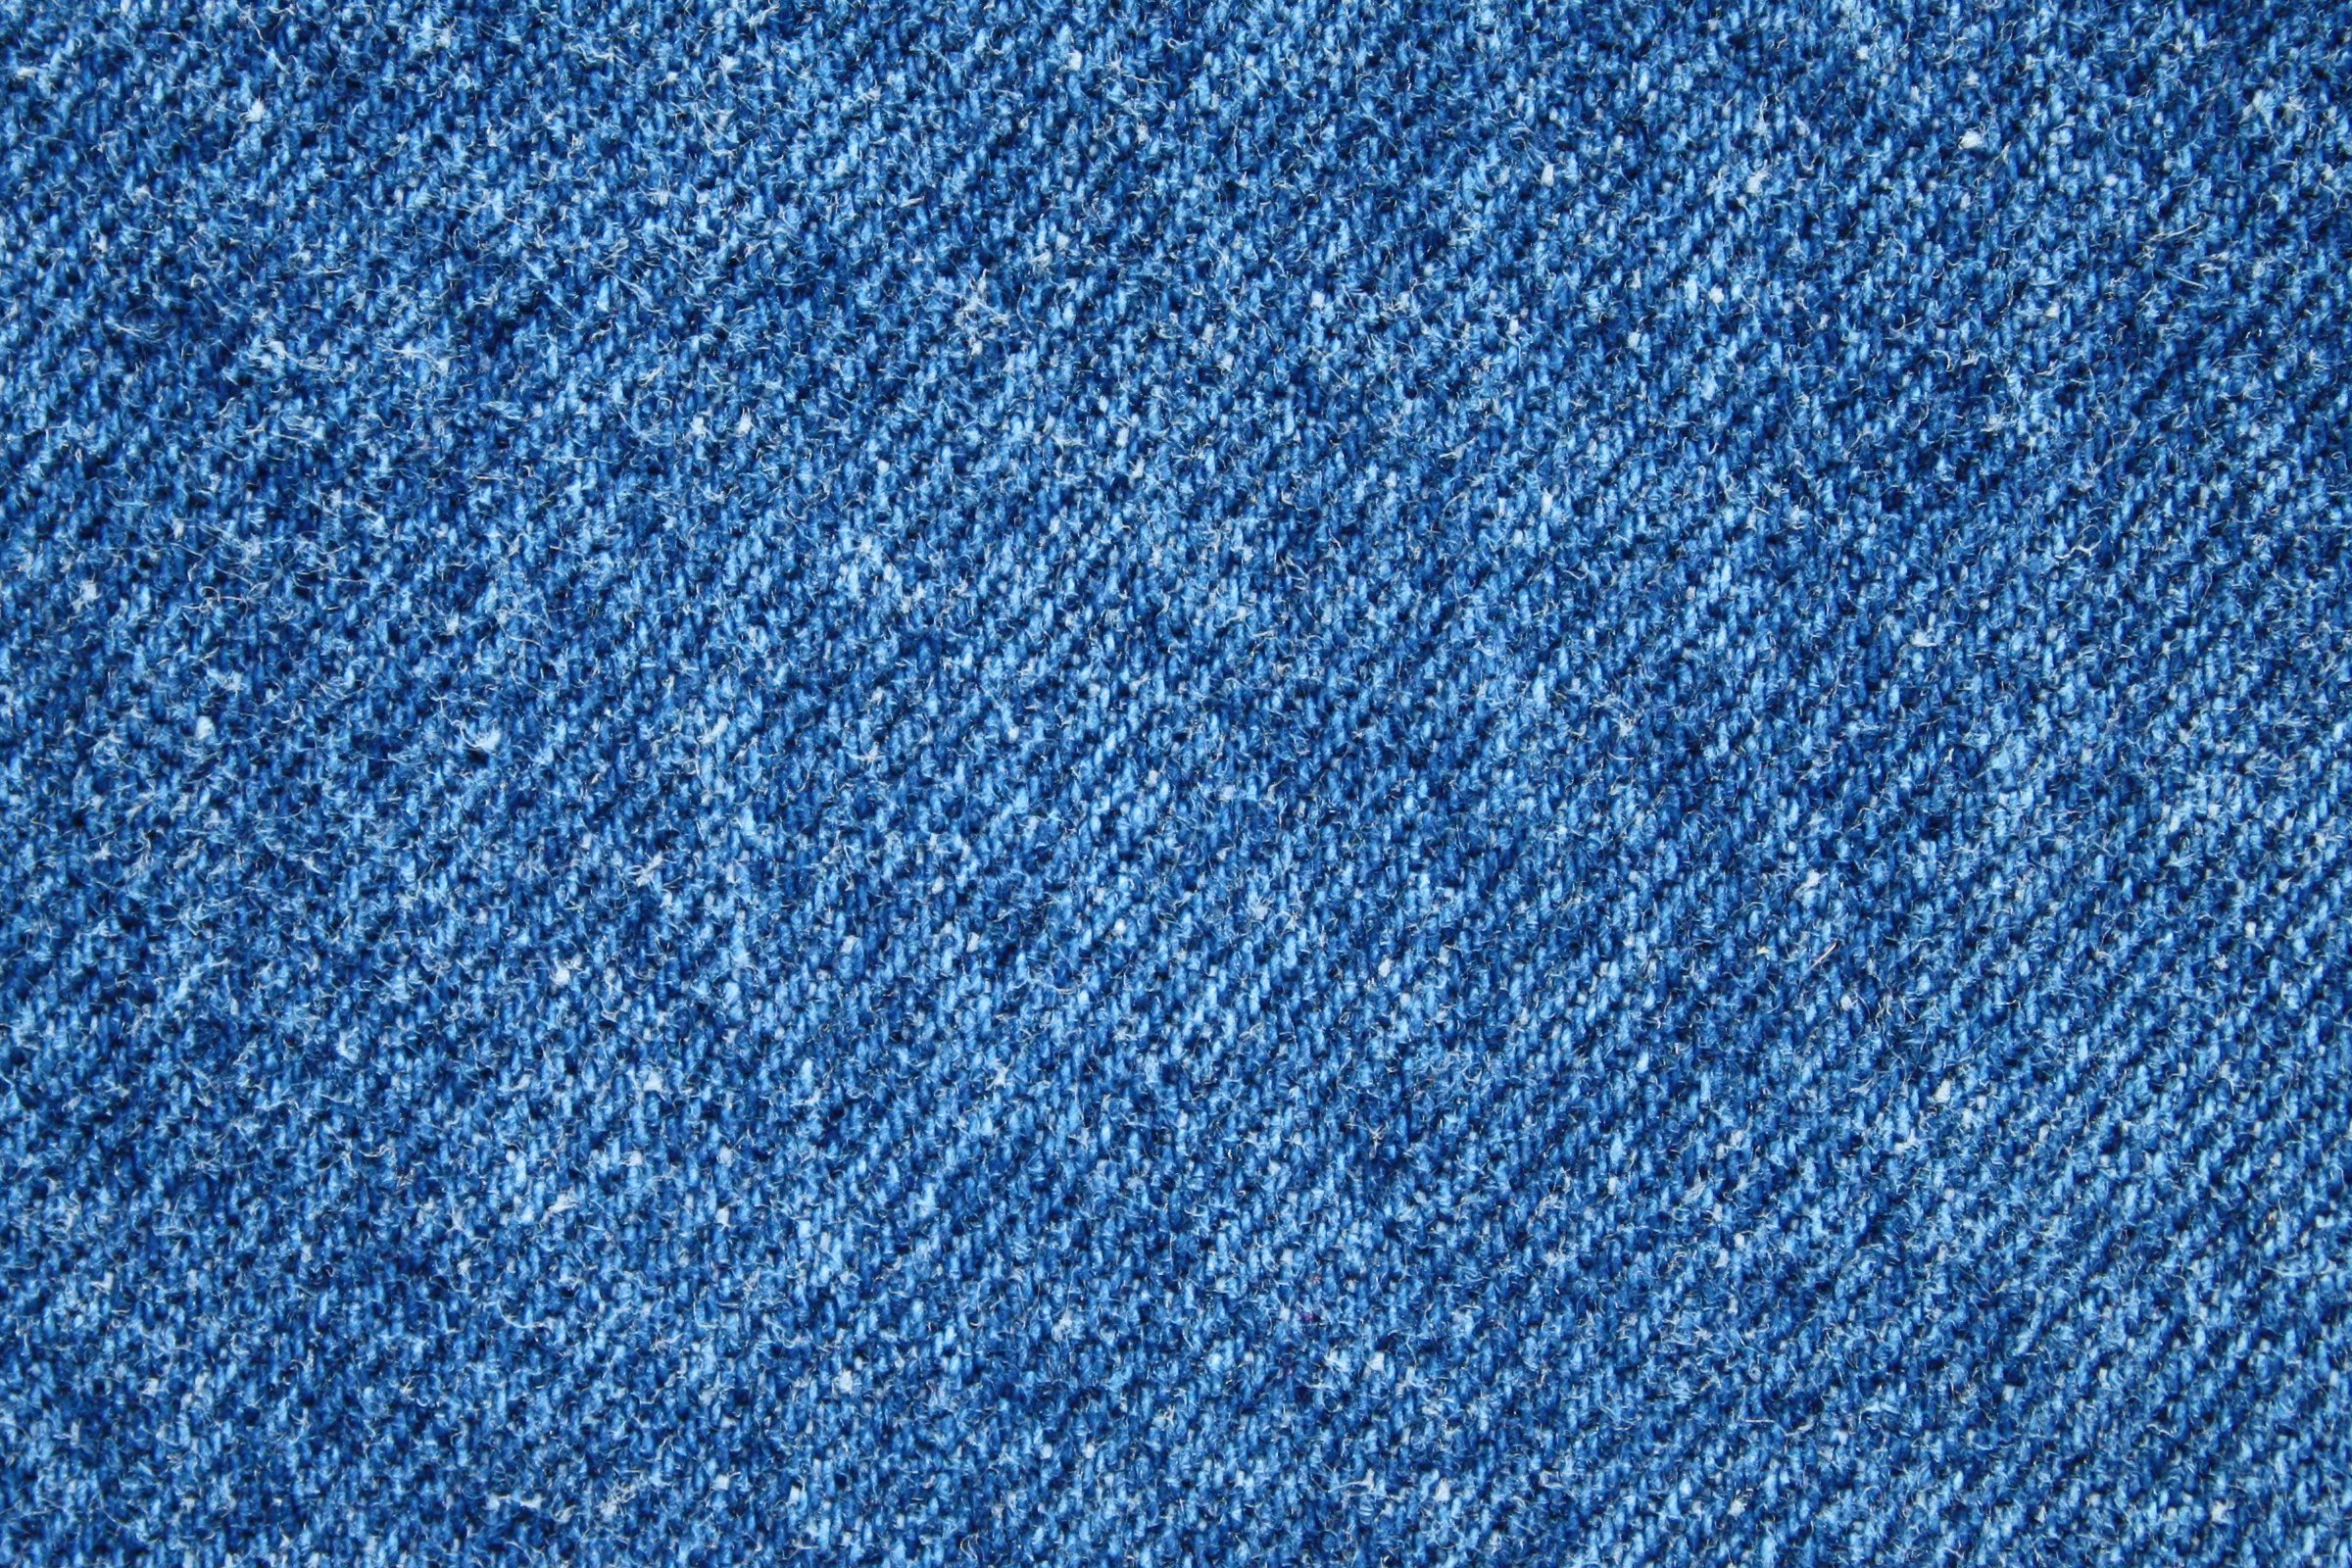 File:Blue Denim Fabric Texture Free Creative Commons (6816223272